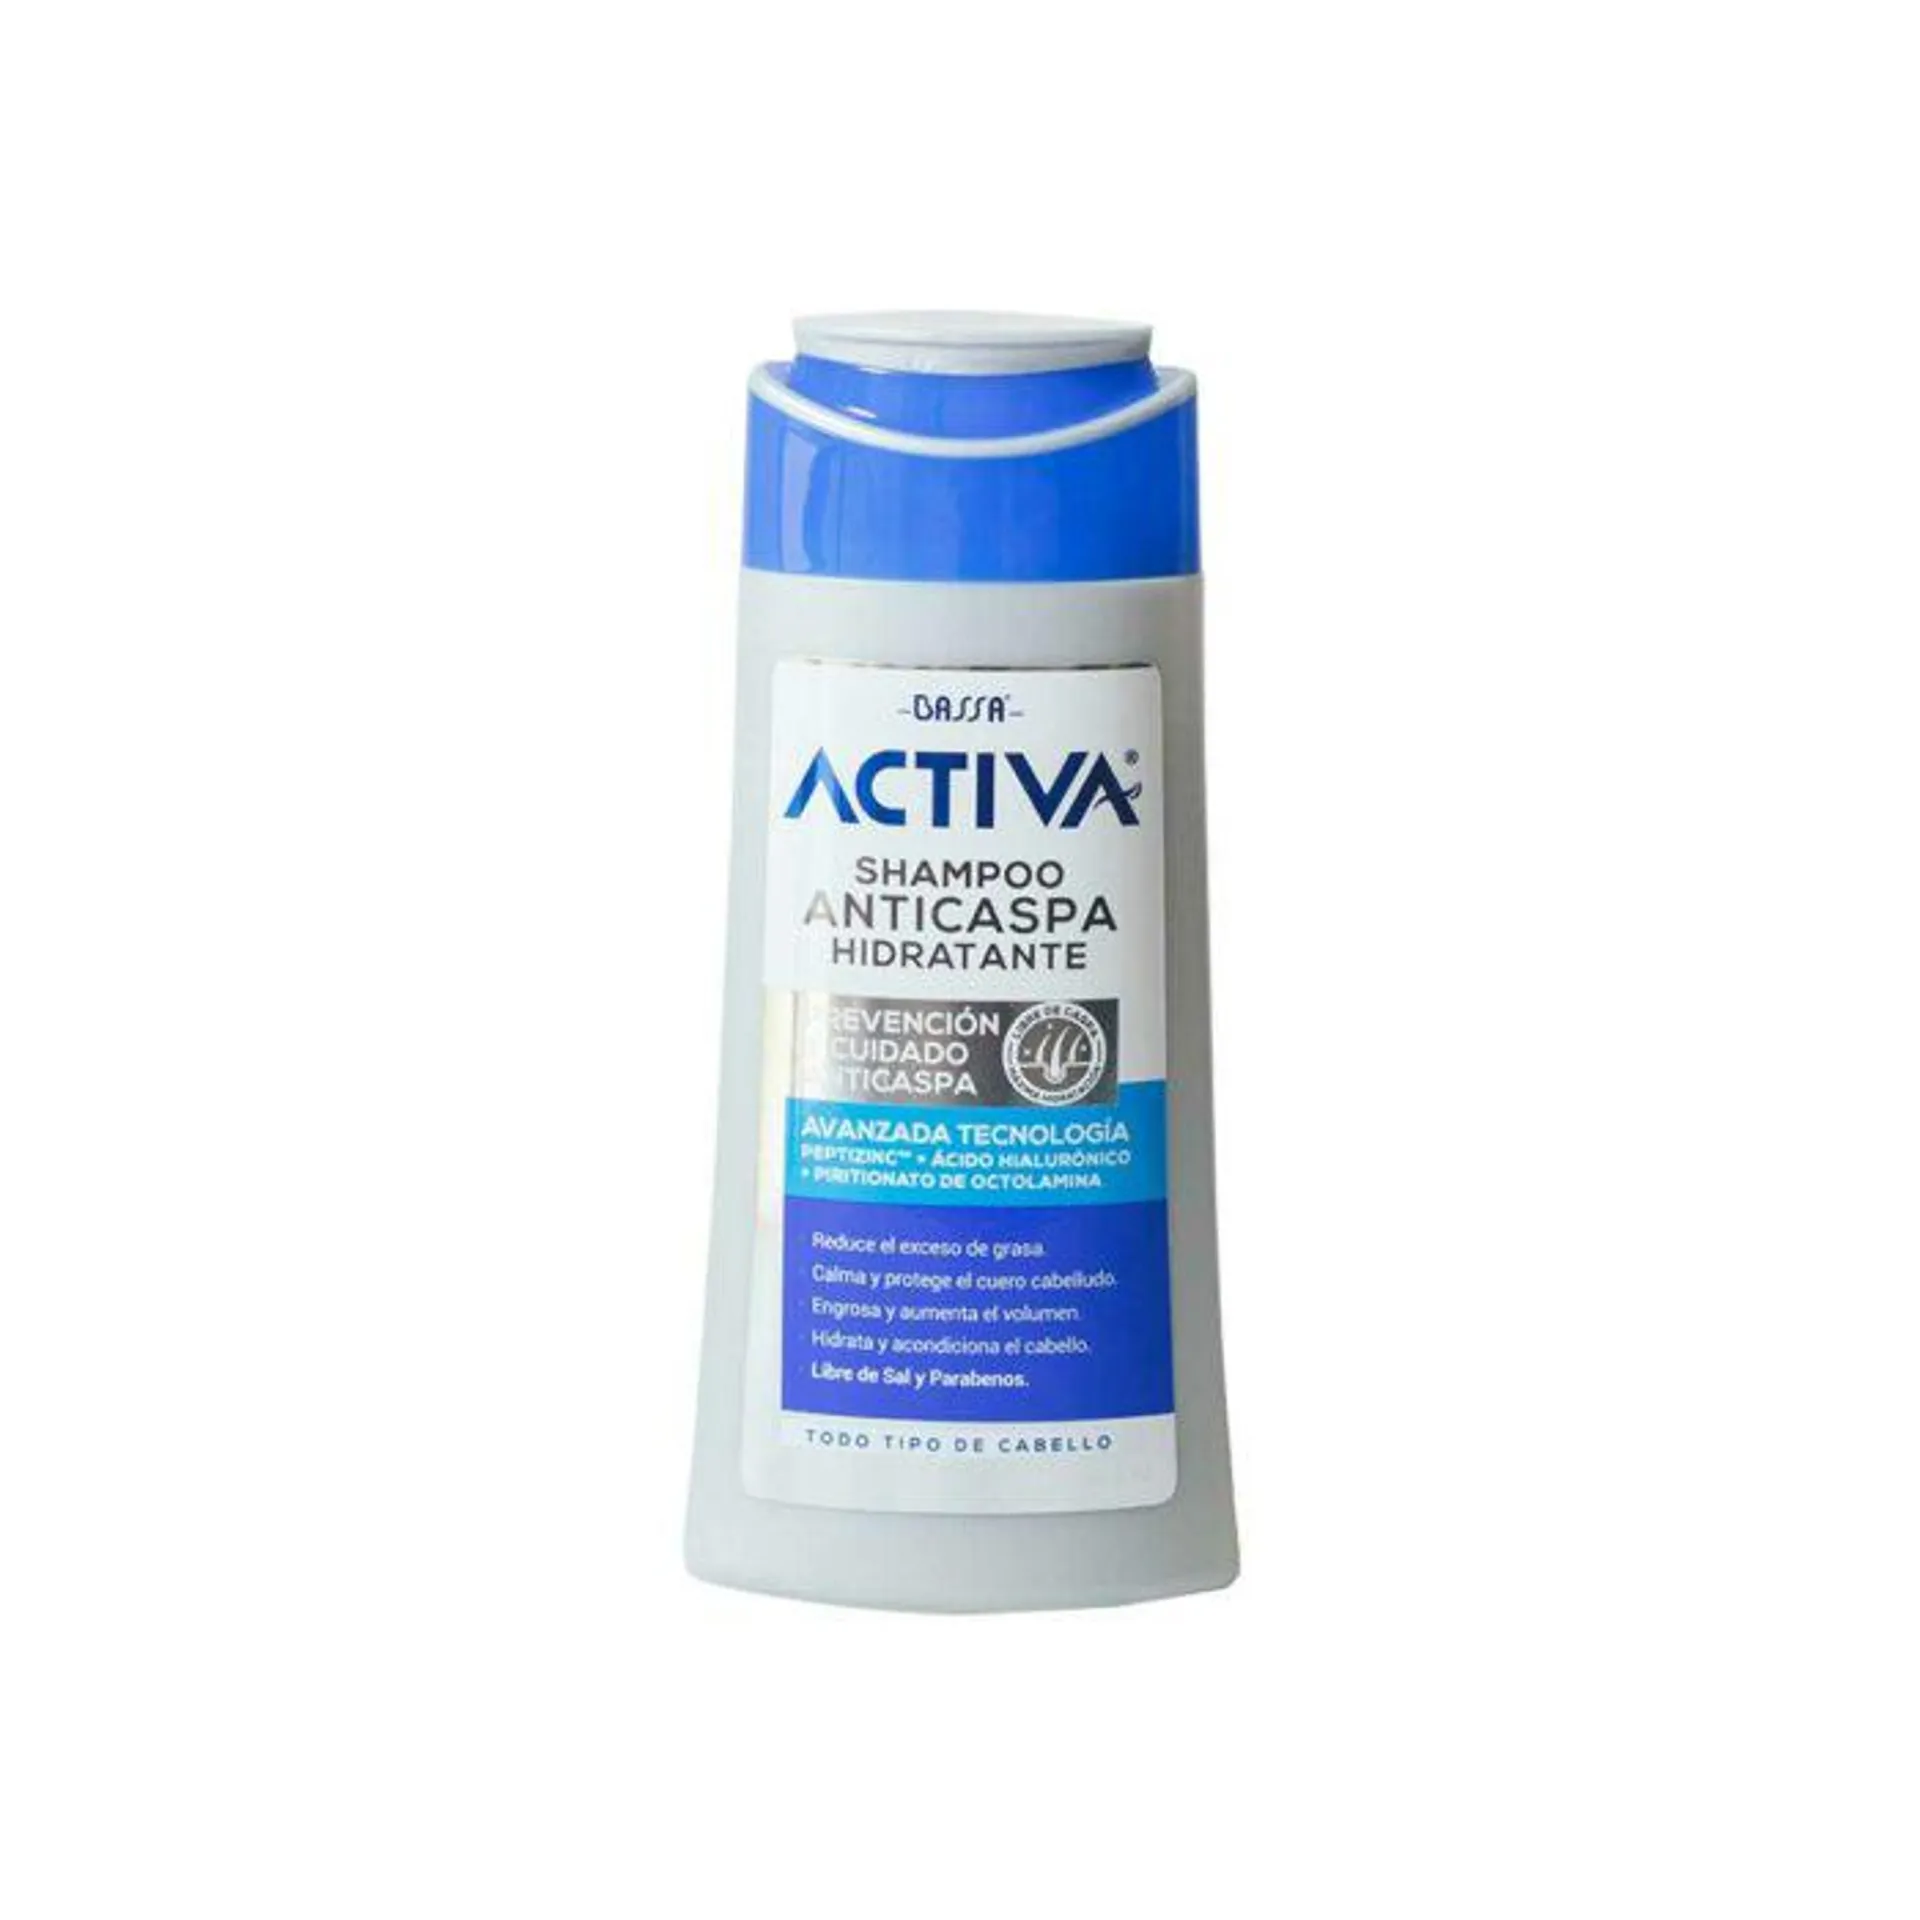 Activa Shampoo Anticaspa Hidratante